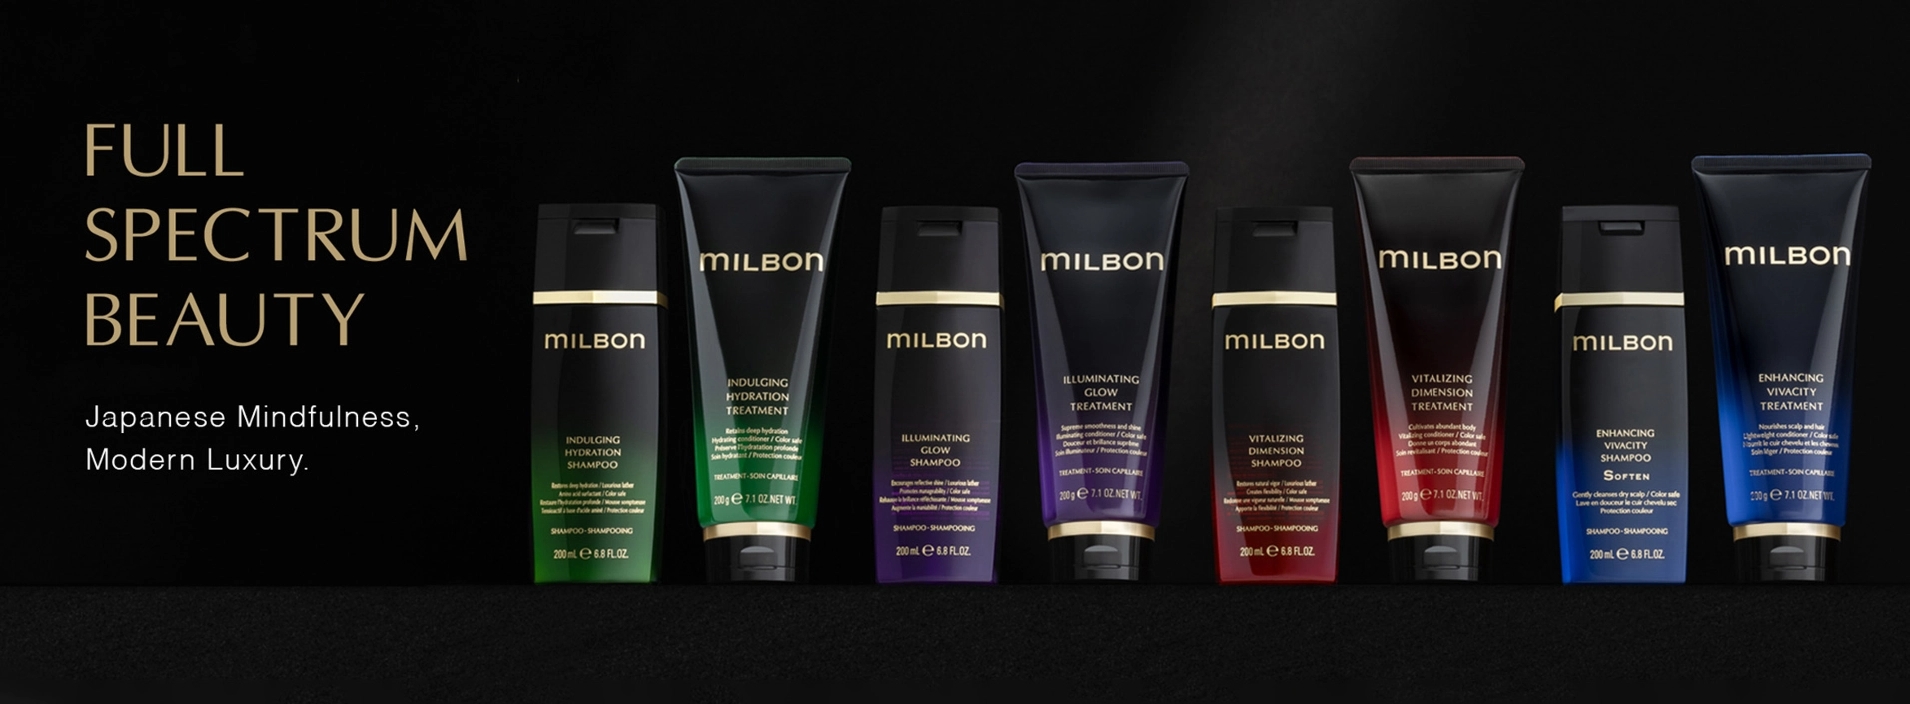 Milbon Luxury Products - Full Spectrum Beauty